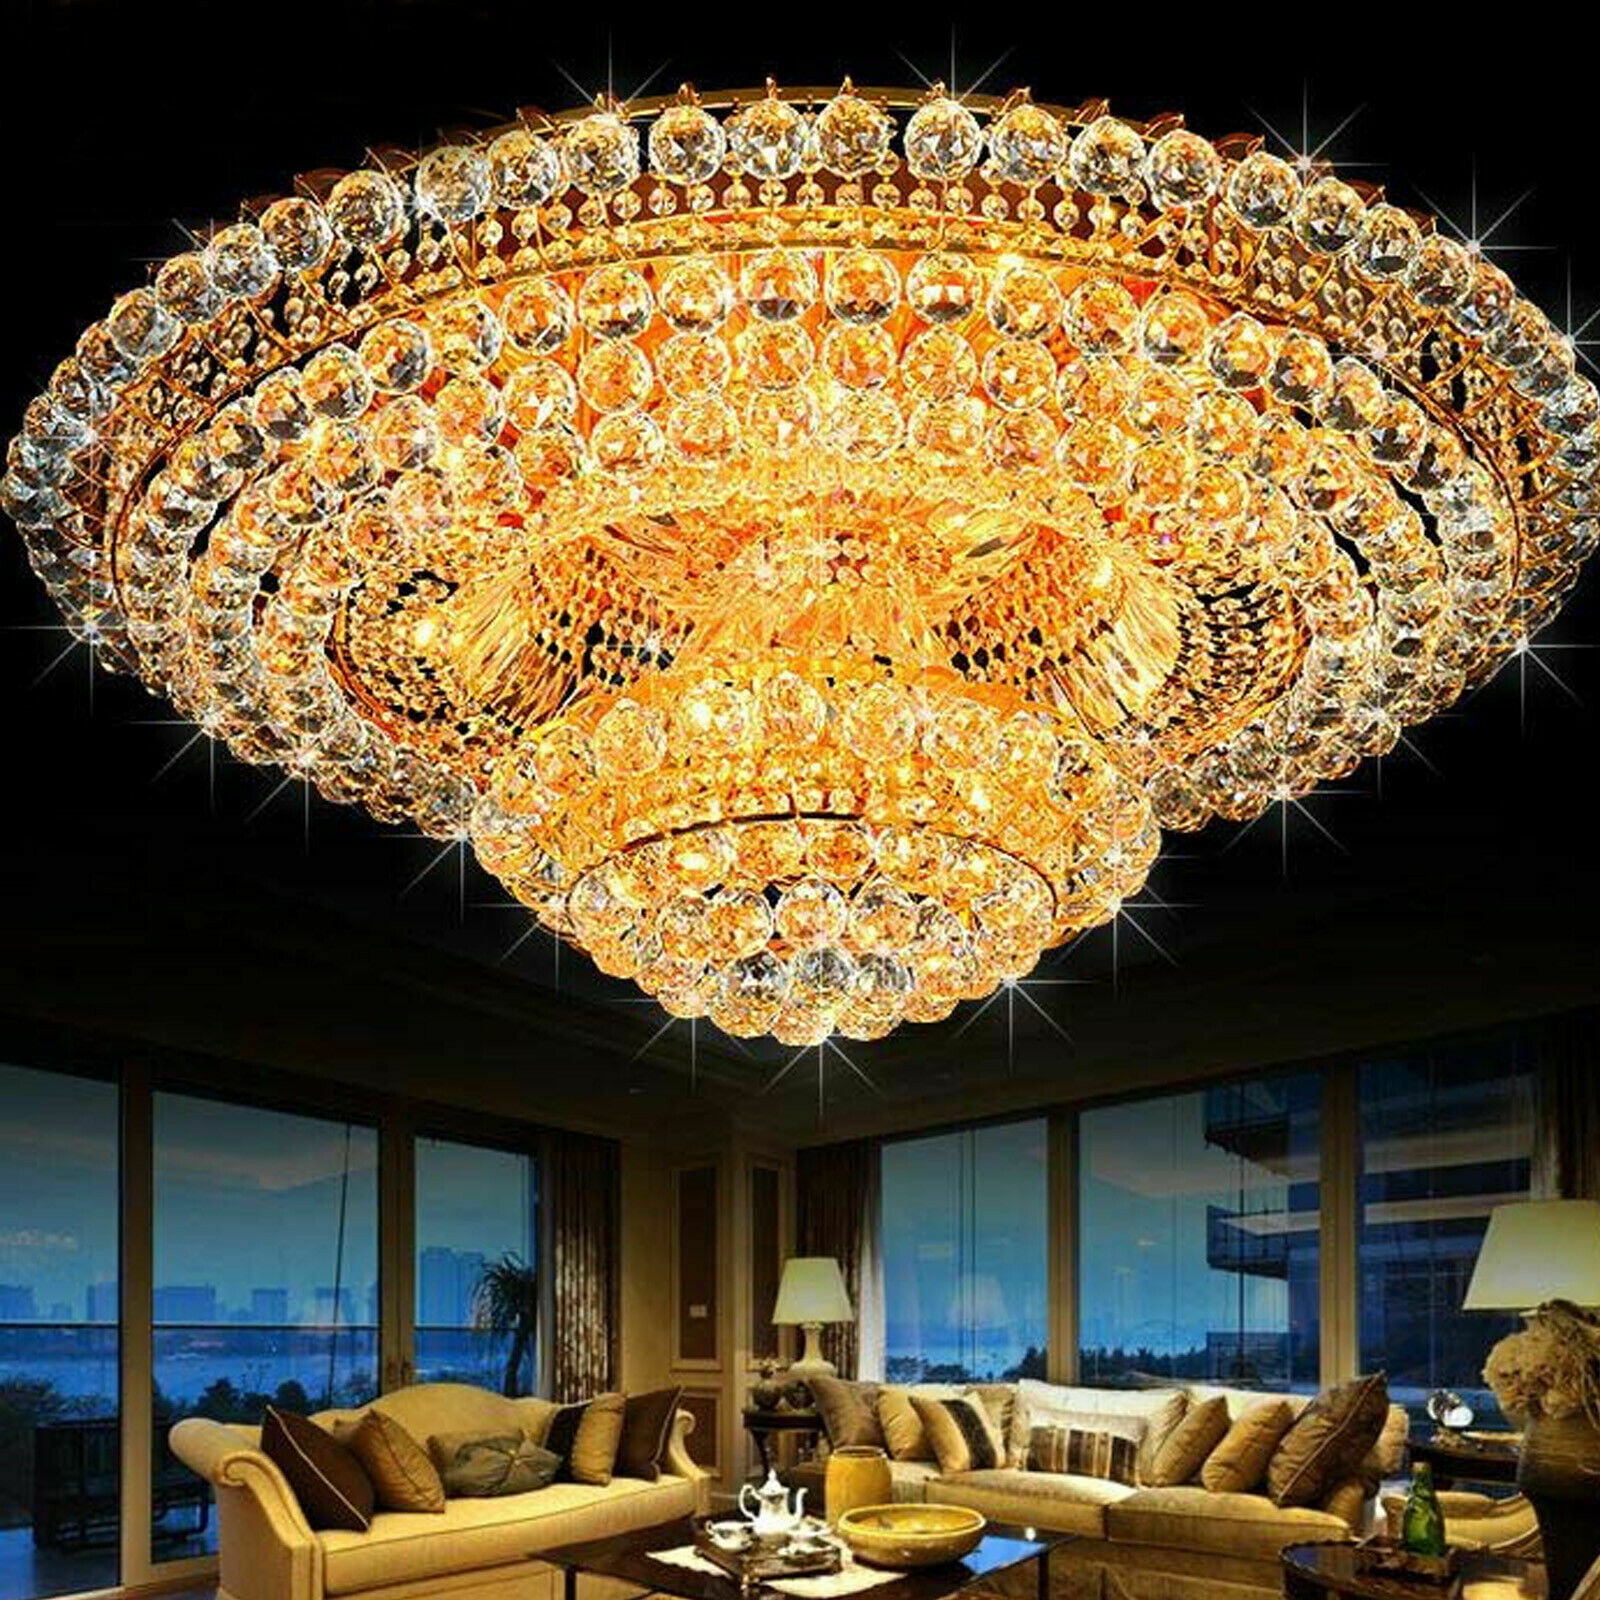 Modern fashion K9 clear crystal chandelier ceiling lamp fixture lighting #6231 